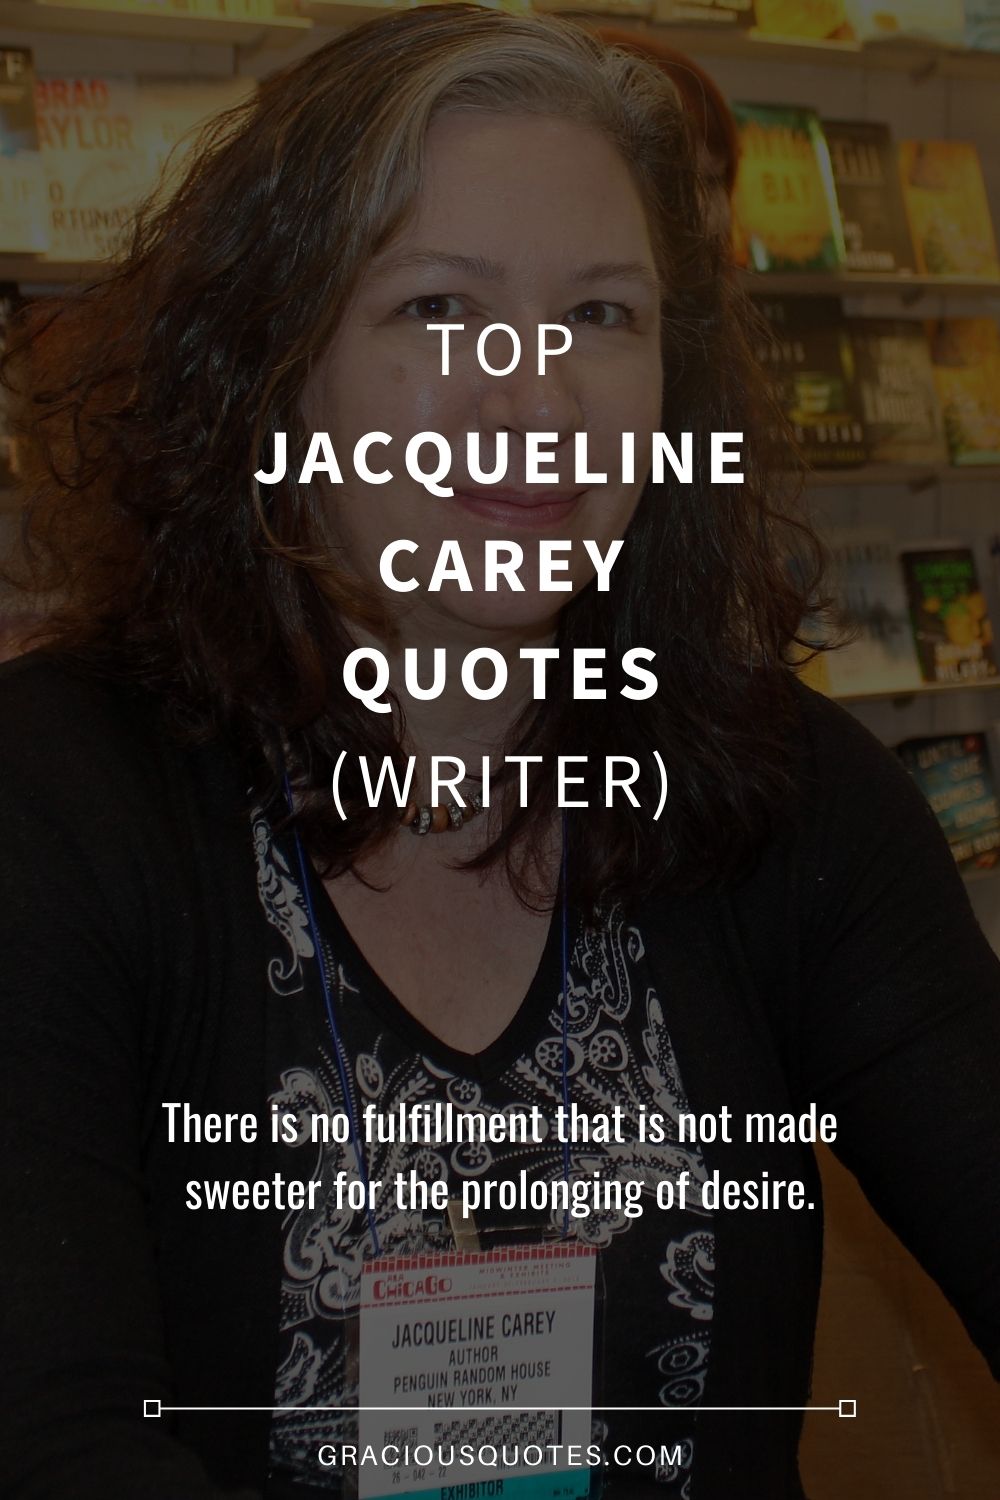 Top 30 Jacqueline Carey Quotes (WRITER) - Gracious Quotes